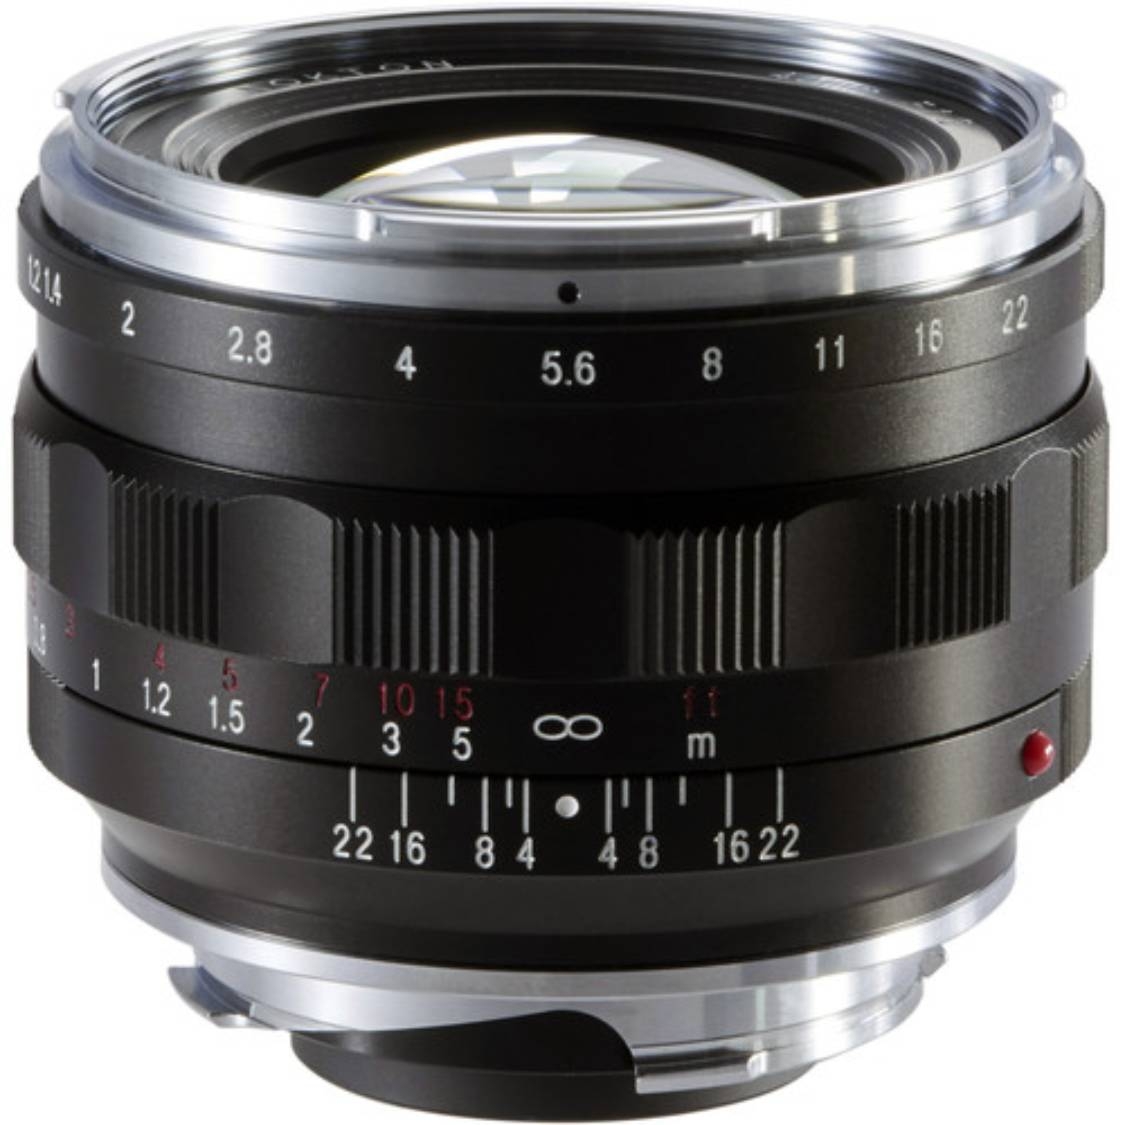 Voigtlander Nokton 40mm f/1.2 Aspherical Lens for Leica M